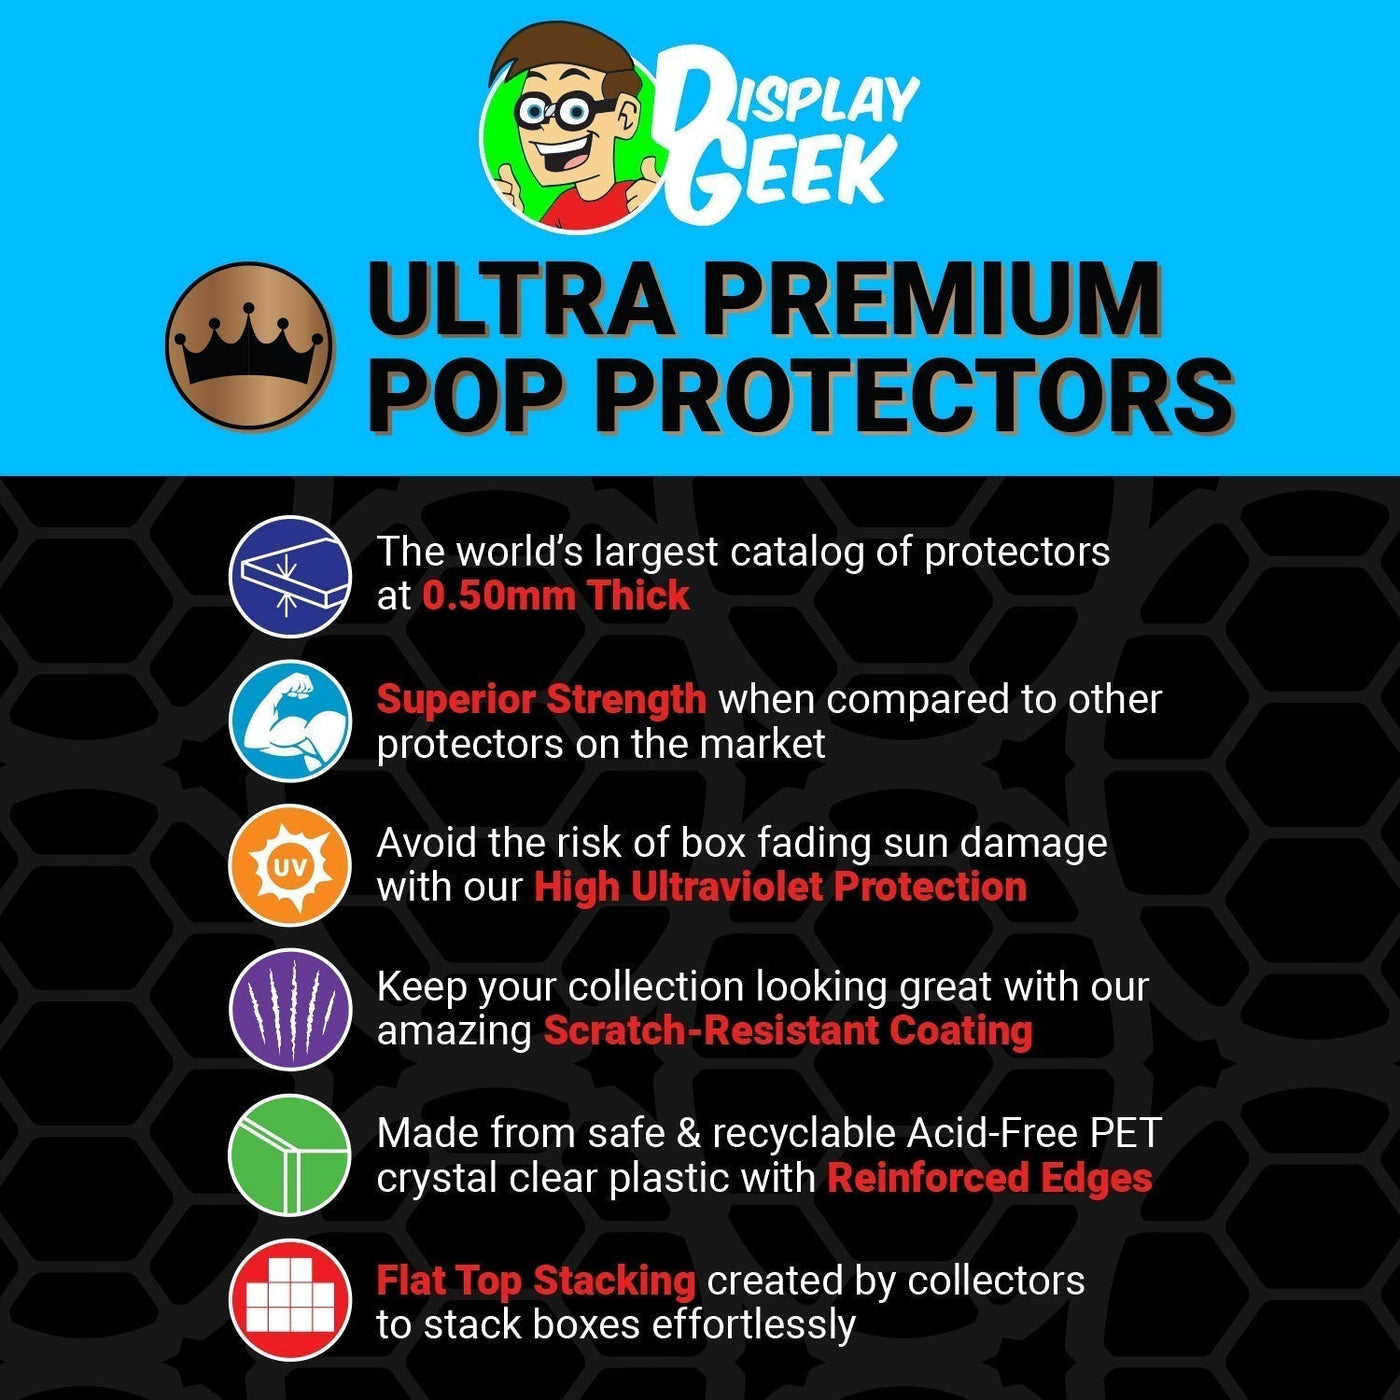 Pop Protector for 2 Pack Sonic the Hedgehog Shadow & Super Shadow Glow in the Dark GameStop Funko Pop on The Protector Guide App by Display Geek